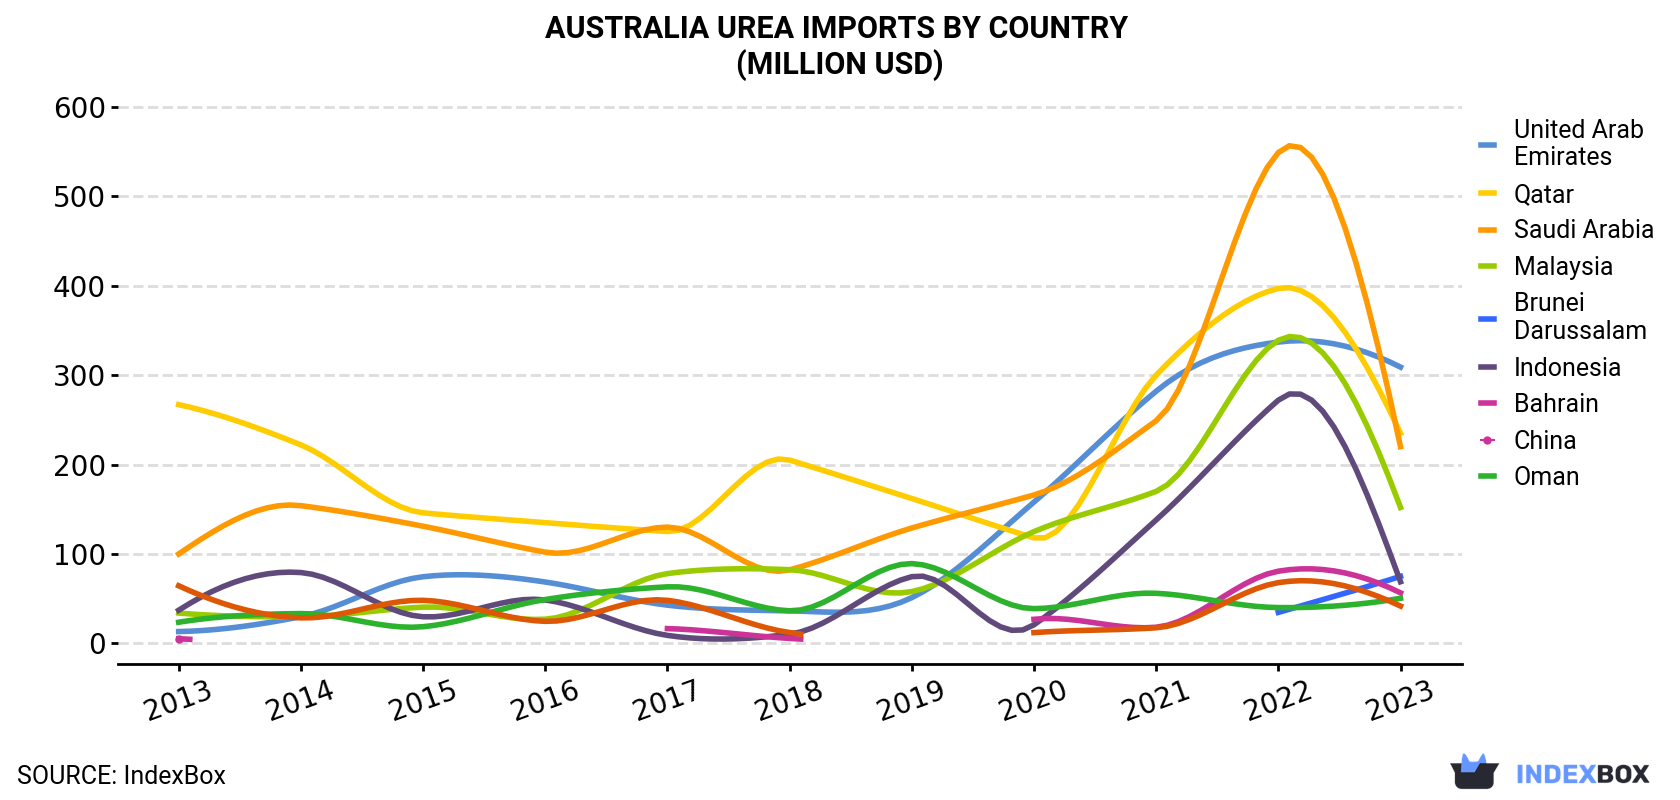 Australia Urea Imports By Country (Million USD)